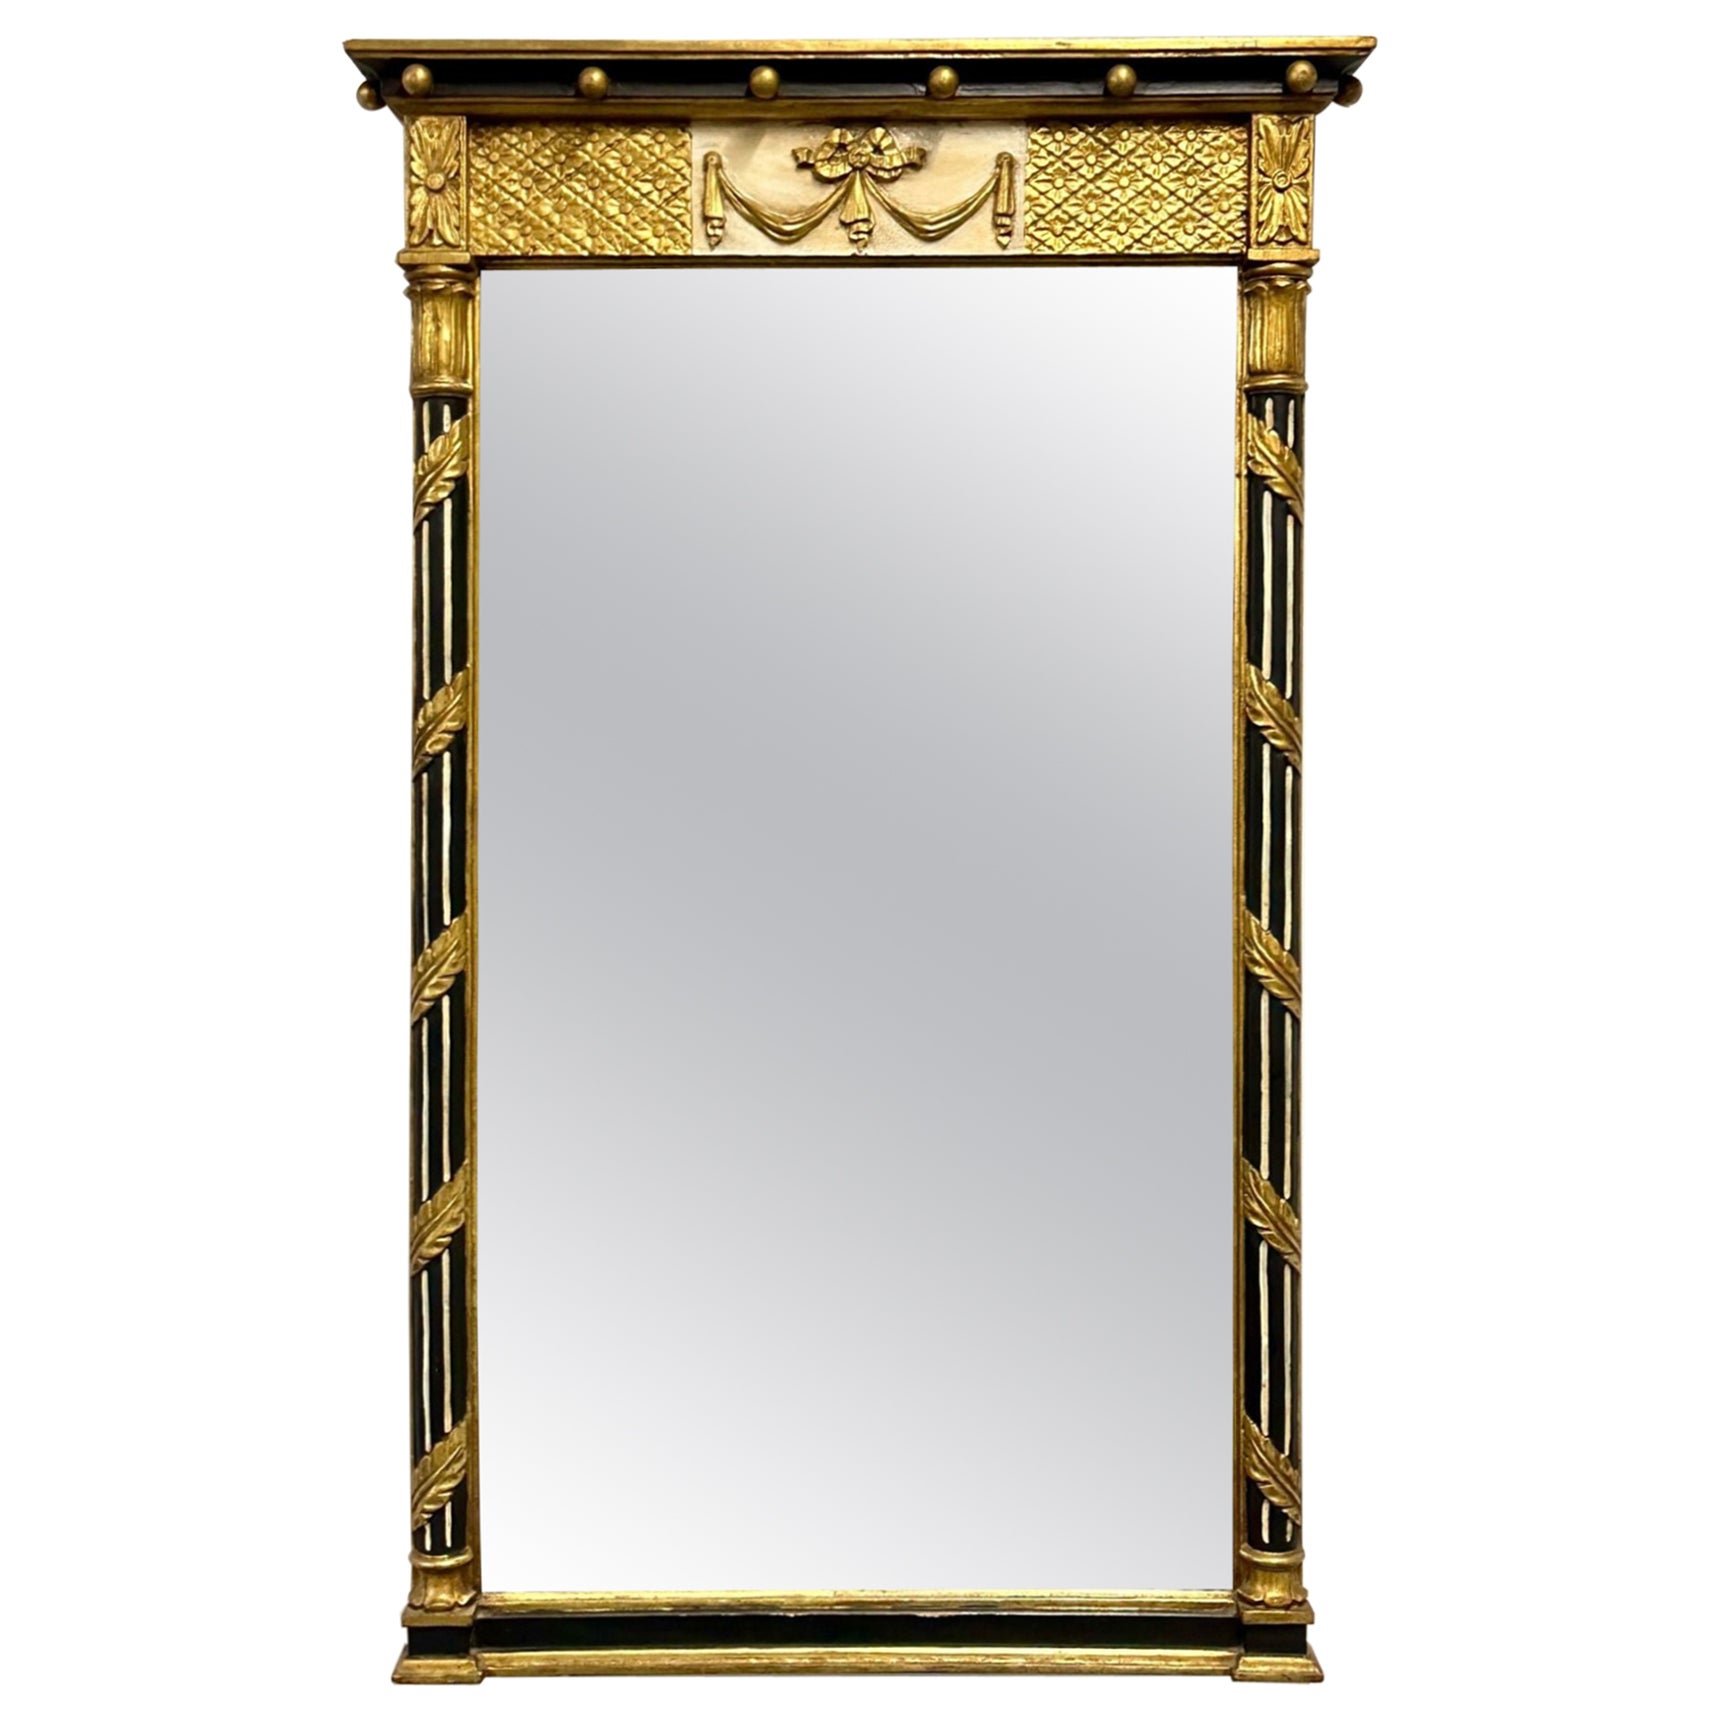 Hollywood-Regency-Spiegel aus vergoldetem Holz, Wand-/Konsolenspiegel, hergestellt in Italien